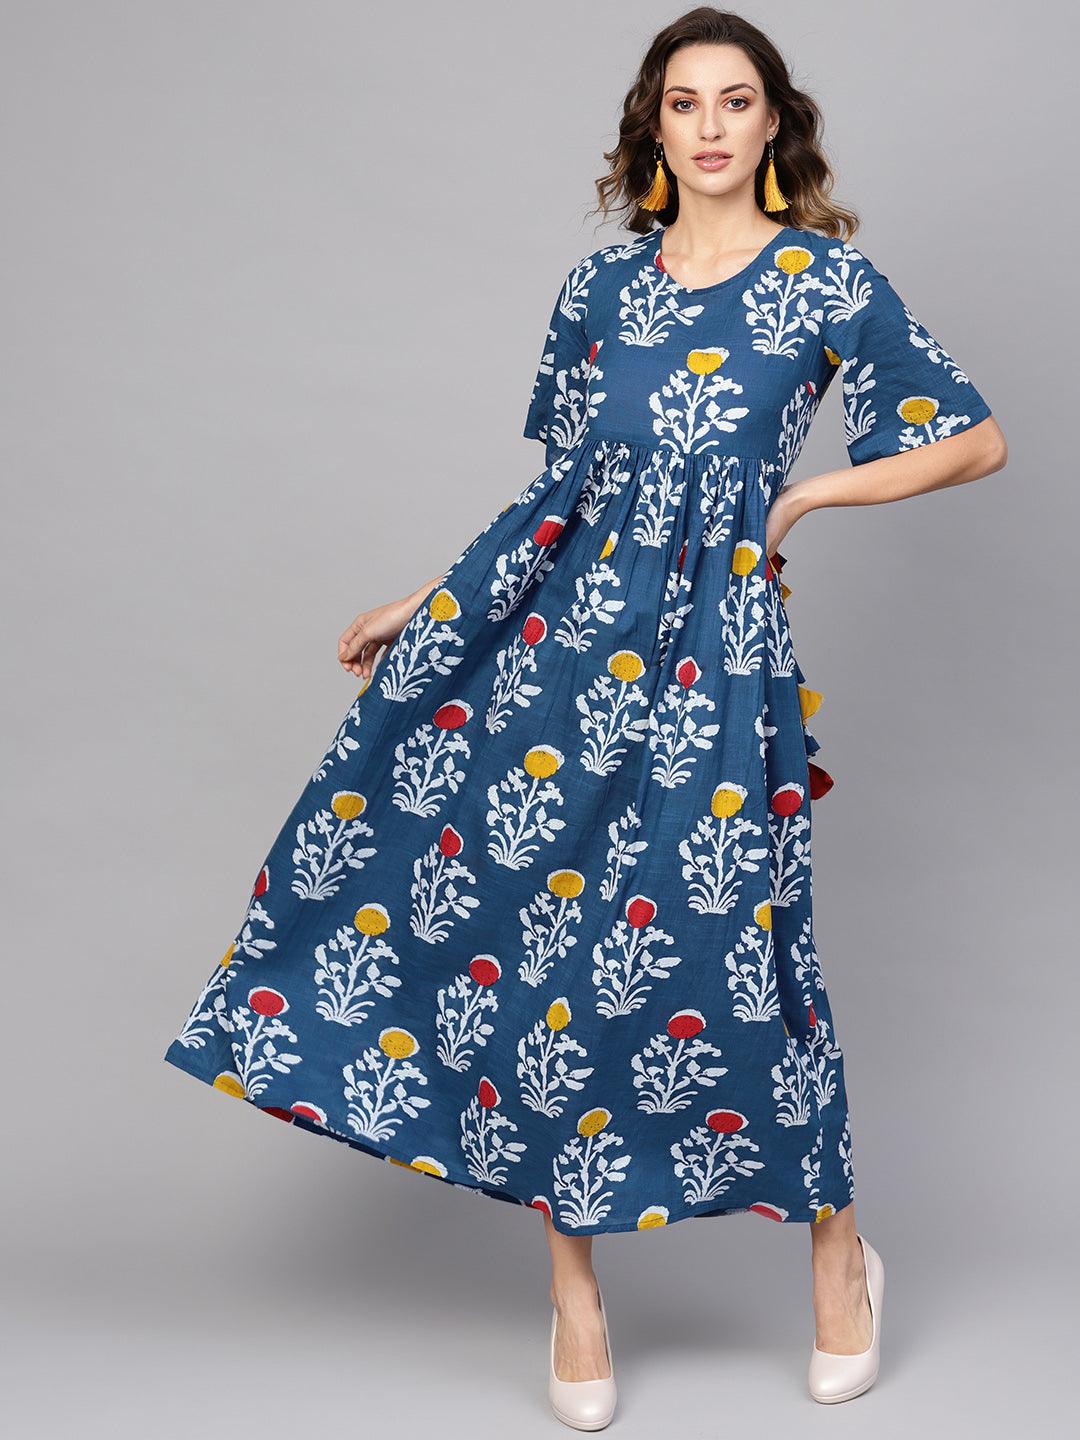 Indigo Printed Maxi Dress With Back Detailing (Fully Stitched) - Znxclothing